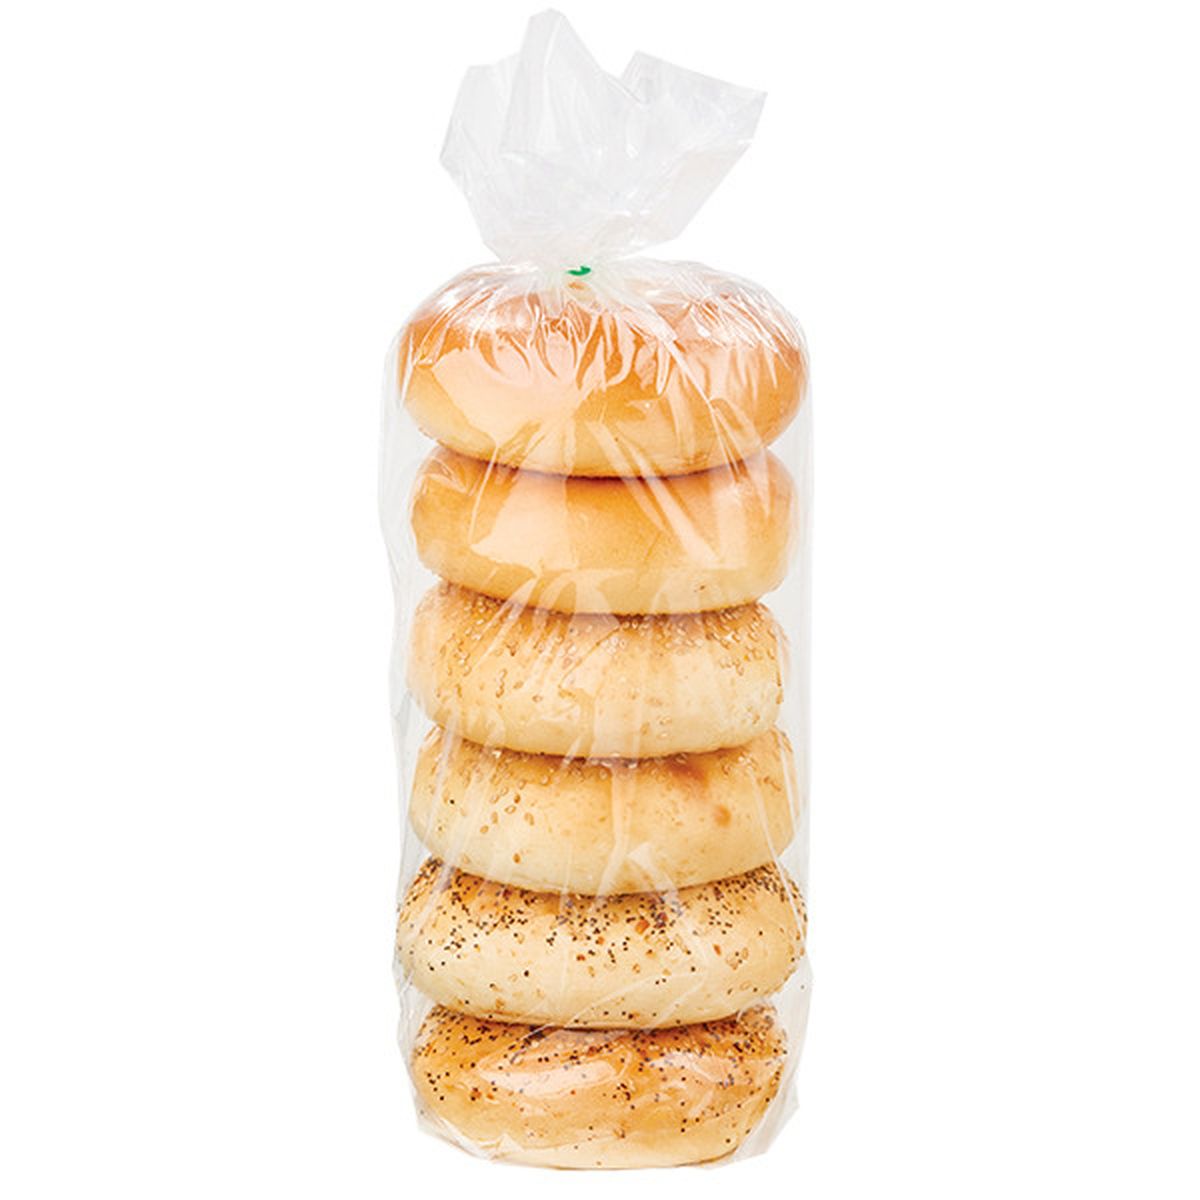 Calories in Wegmans 6 Pack Assorted Bagels